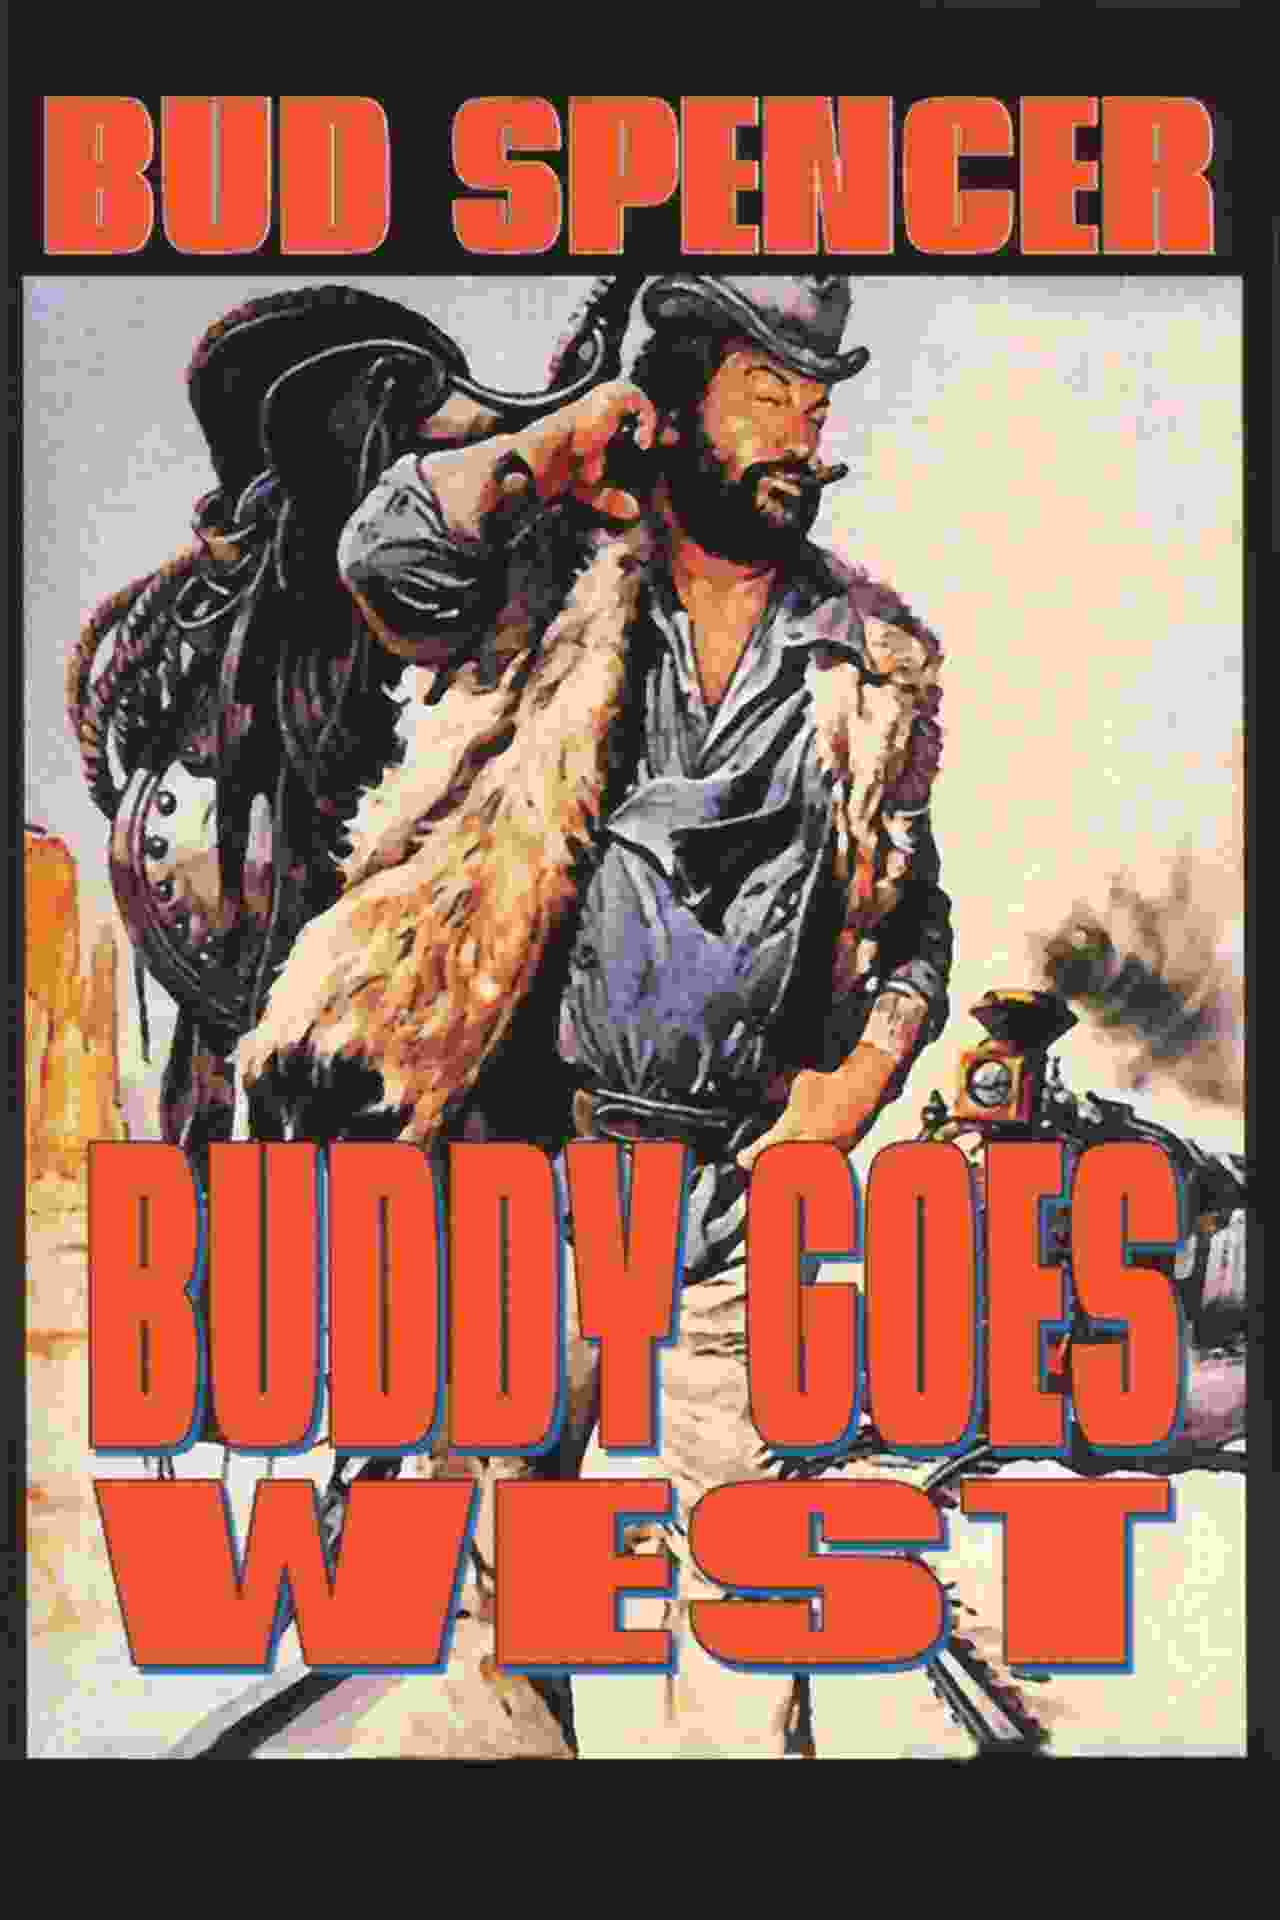 Buddy Goes West (1981) vj emmy Bud Spencer